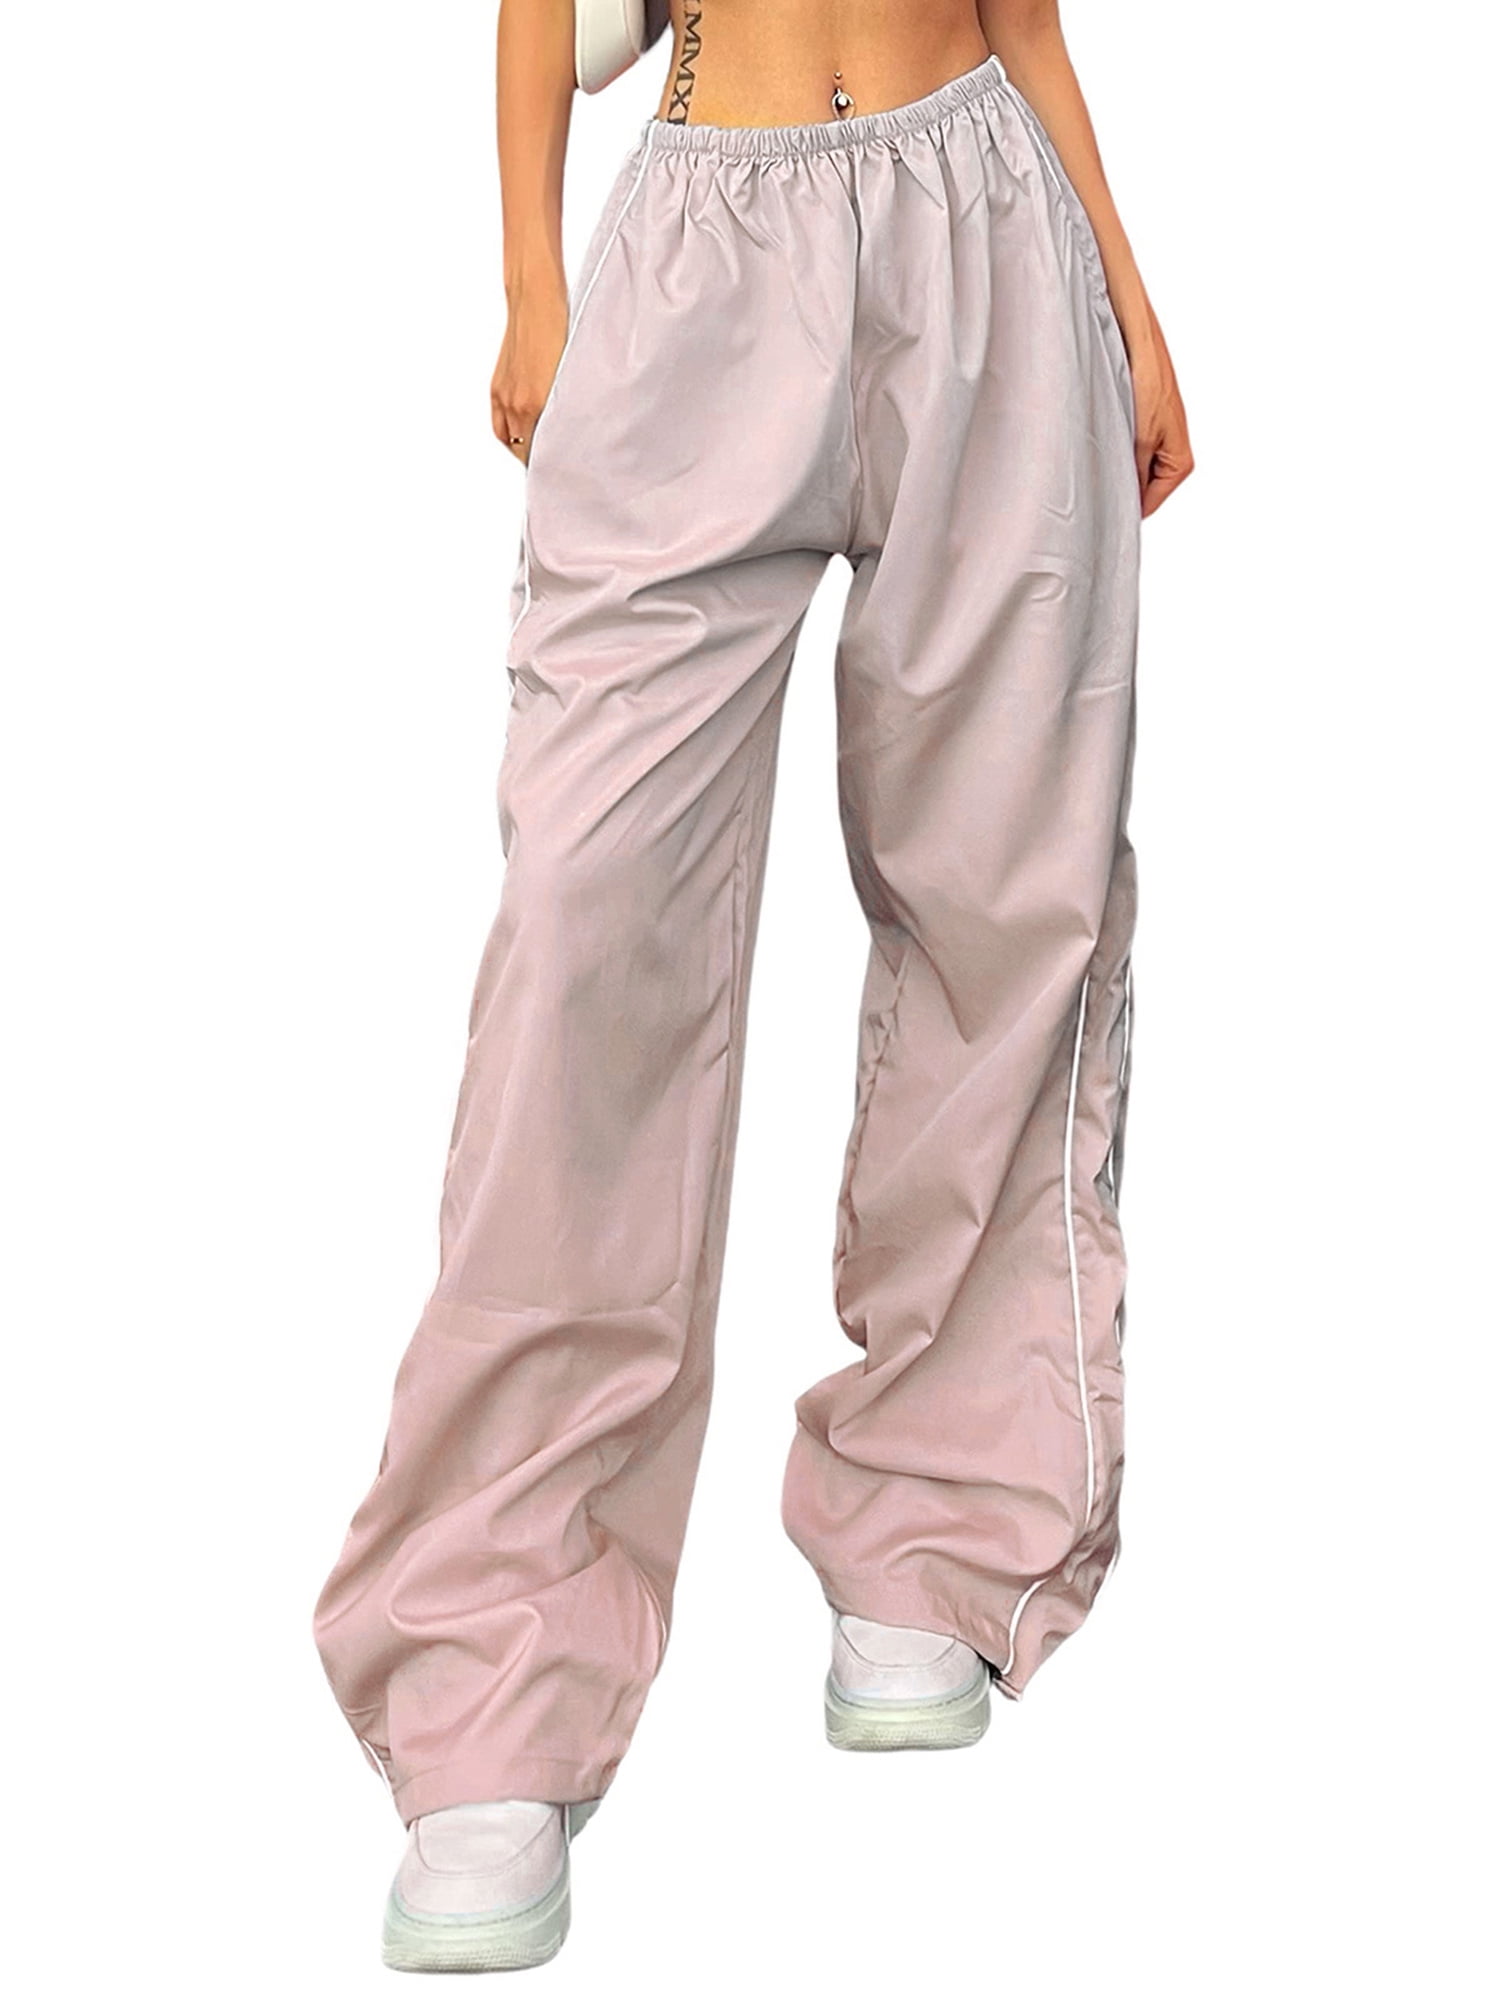 Parachute Cargo Pants for Women Drawstring Elastic Low Waist Y2K Hip Hop  Baggy Pants Multiple Pockets Jogger Trousers (D Navy, XL) at  Women's  Clothing store